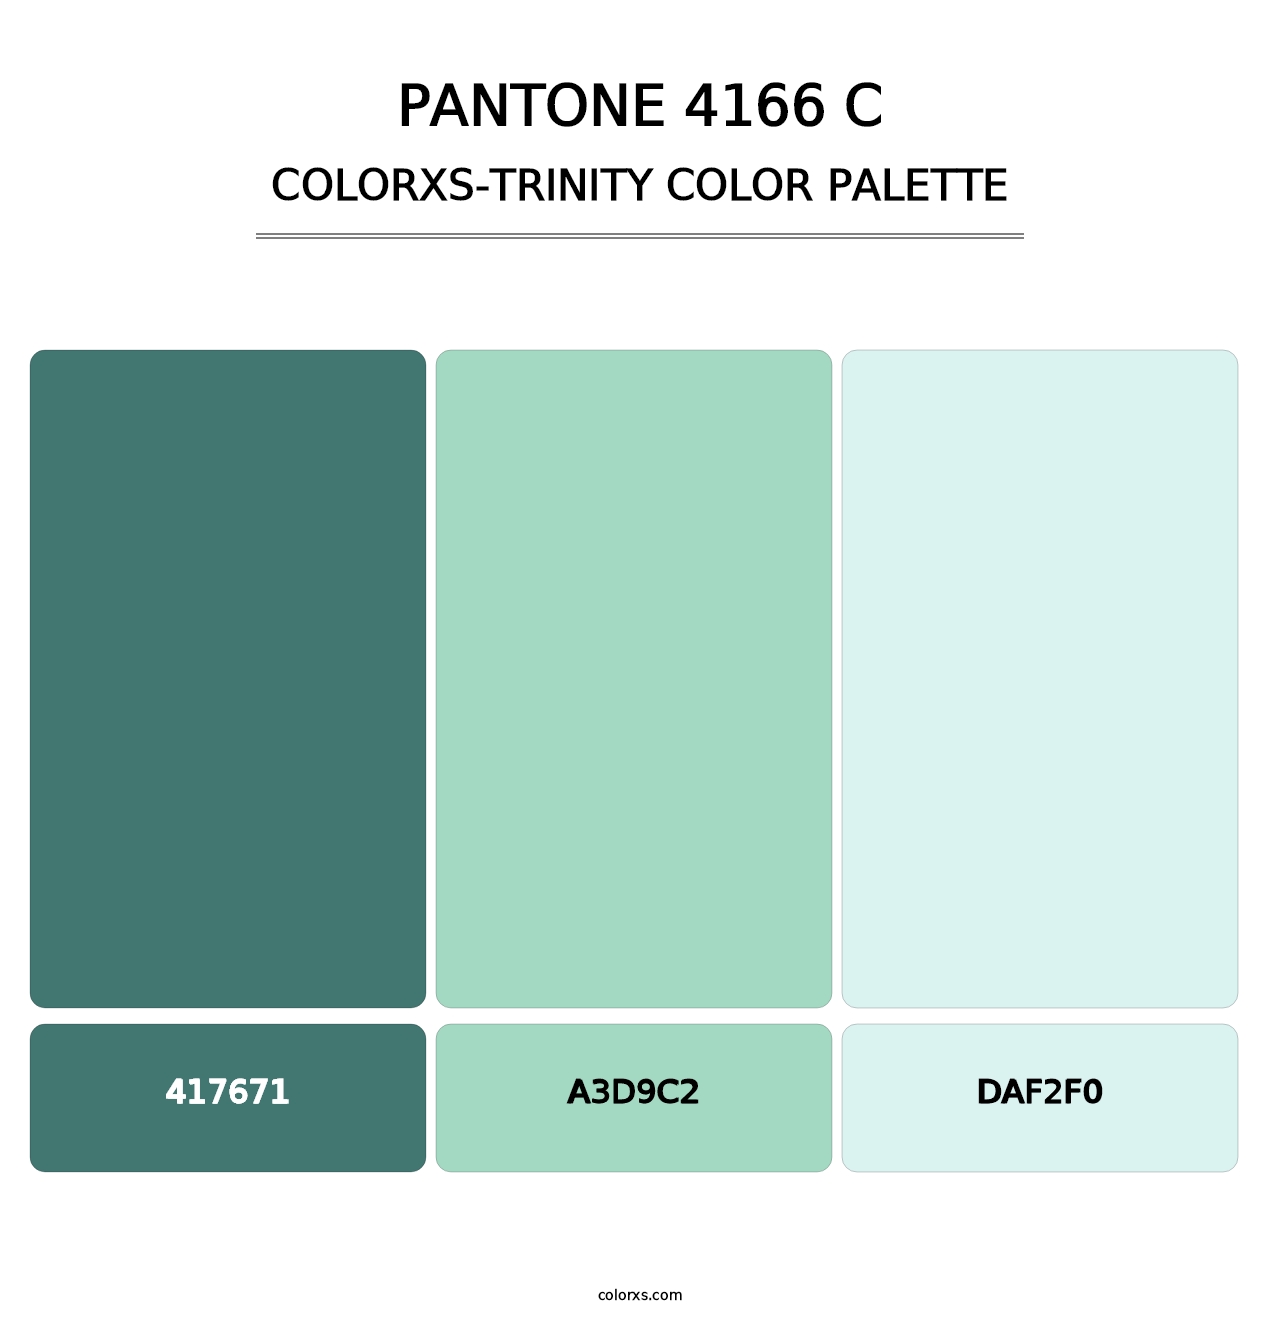 PANTONE 4166 C - Colorxs Trinity Palette